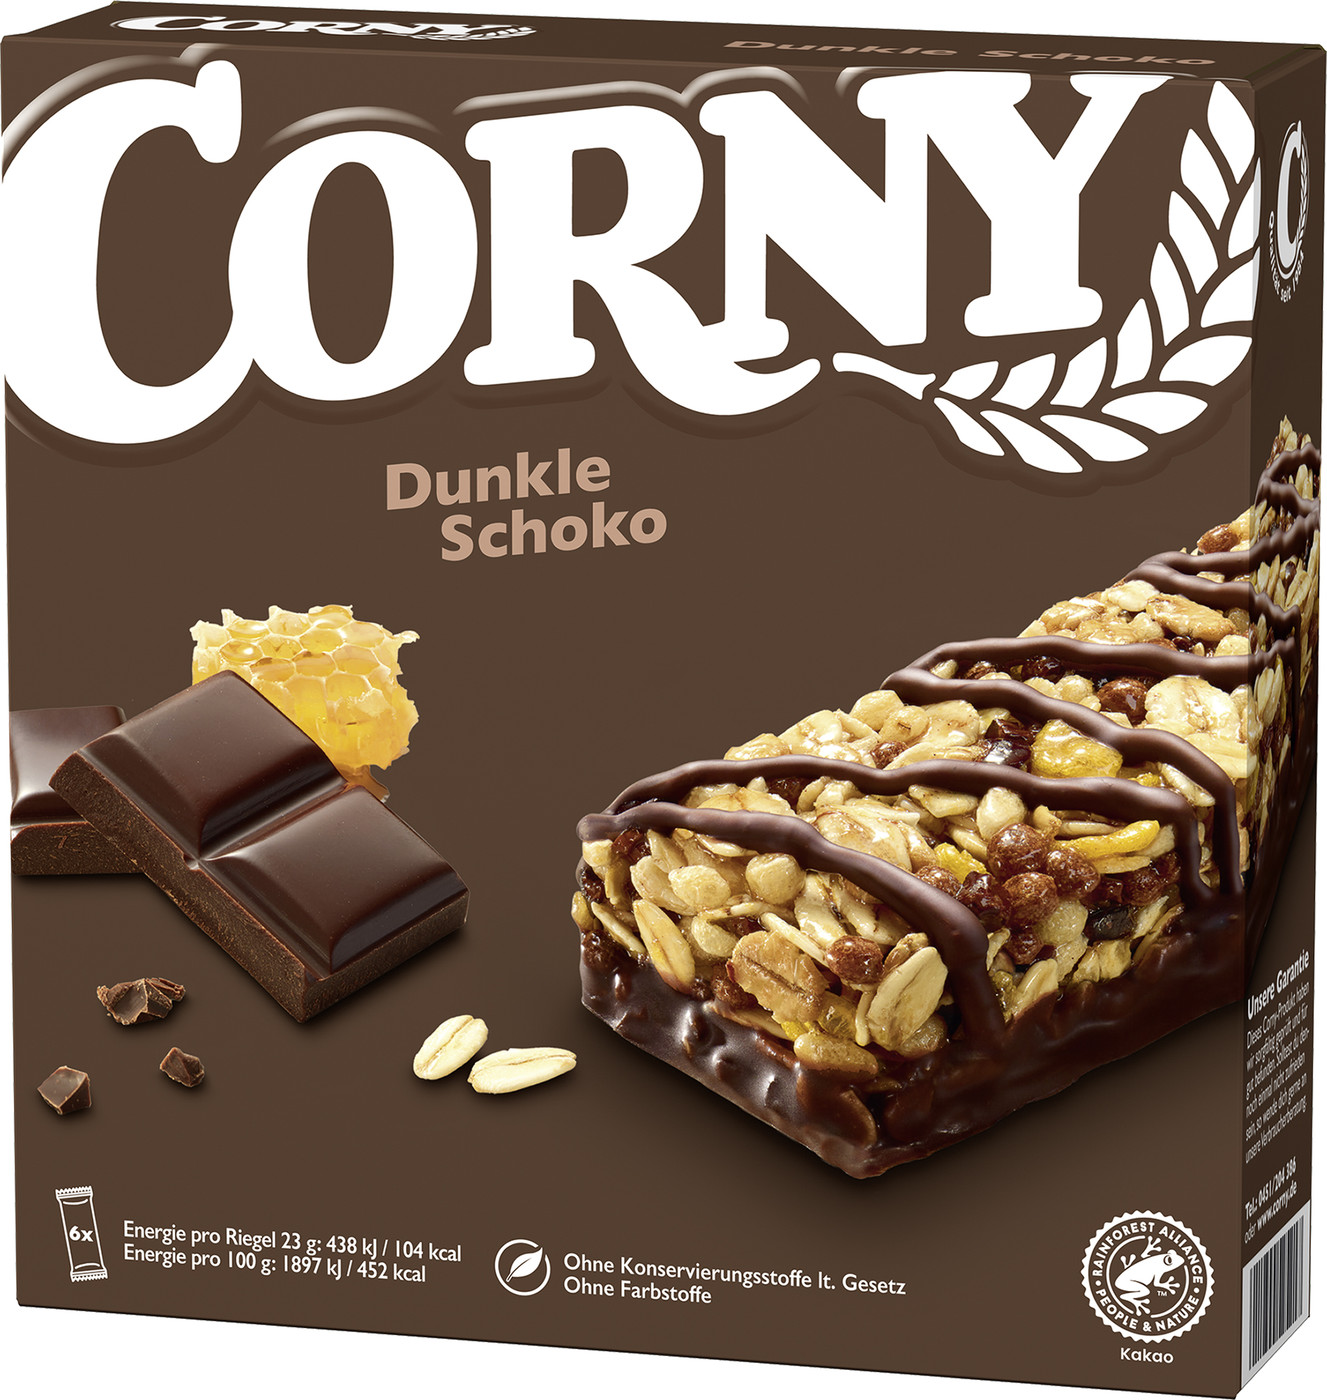 Corny Dunkle Schokolade Riegel 6ST 138G